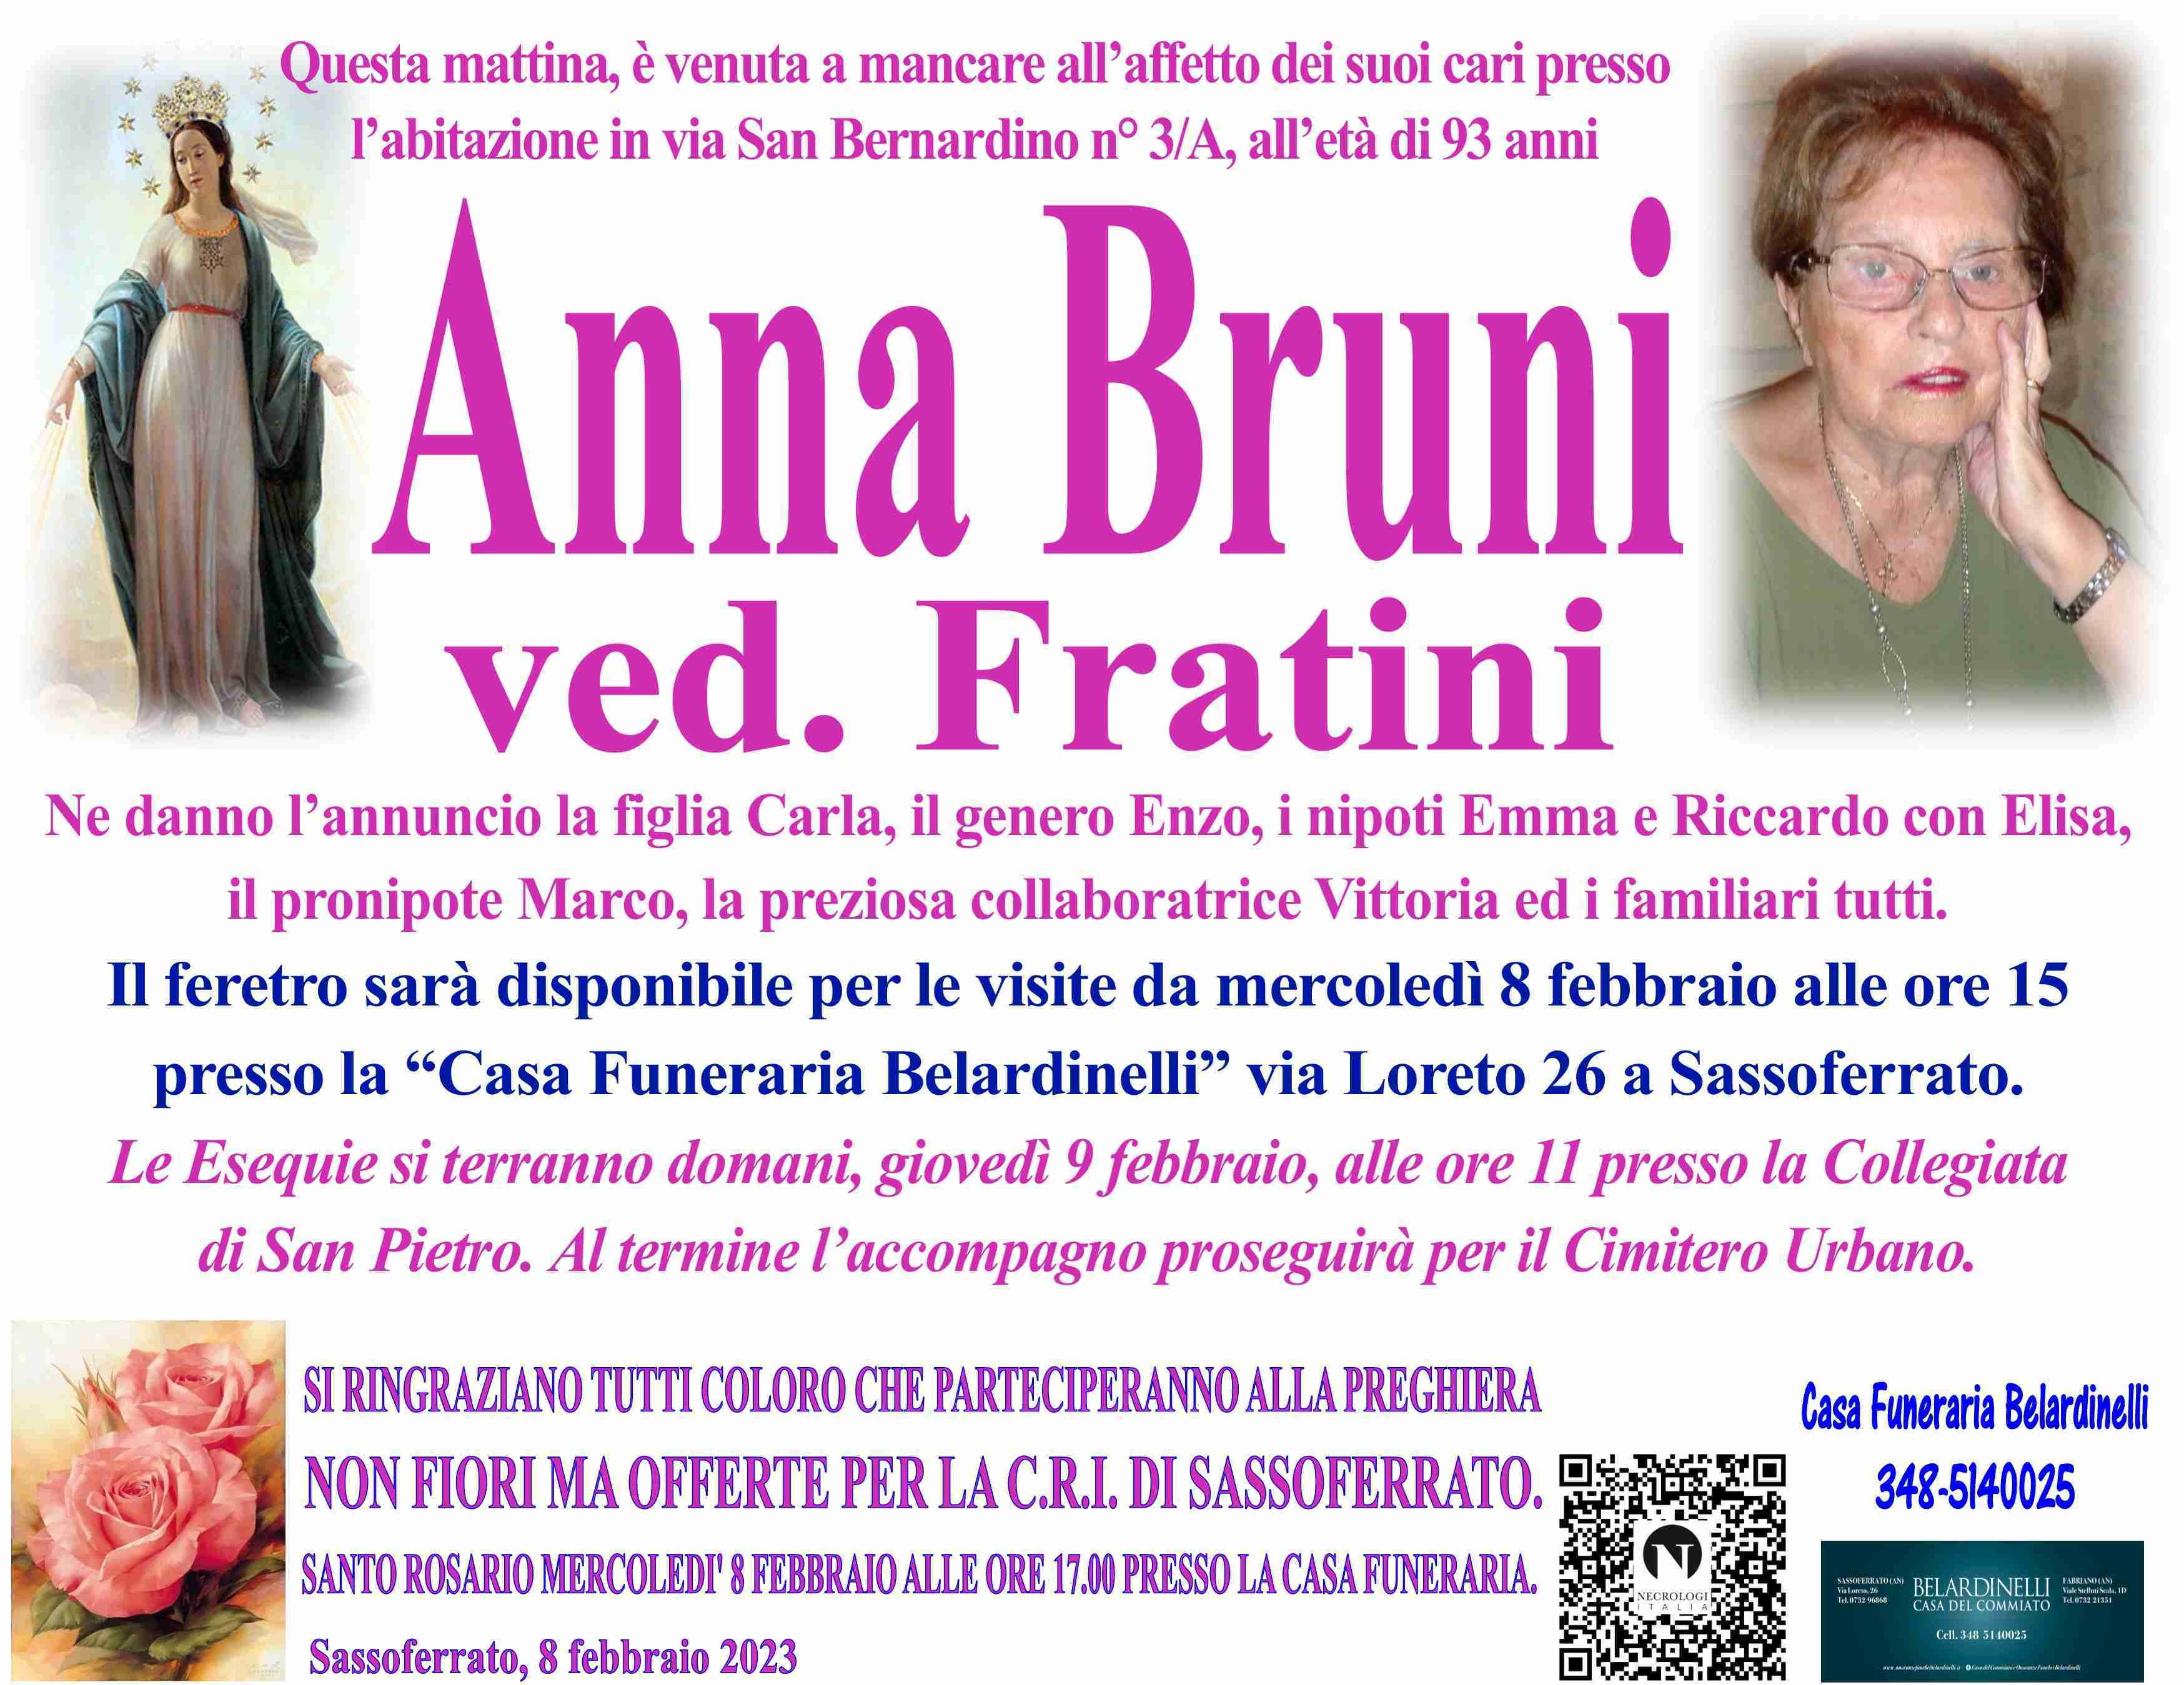 Anna Bruni